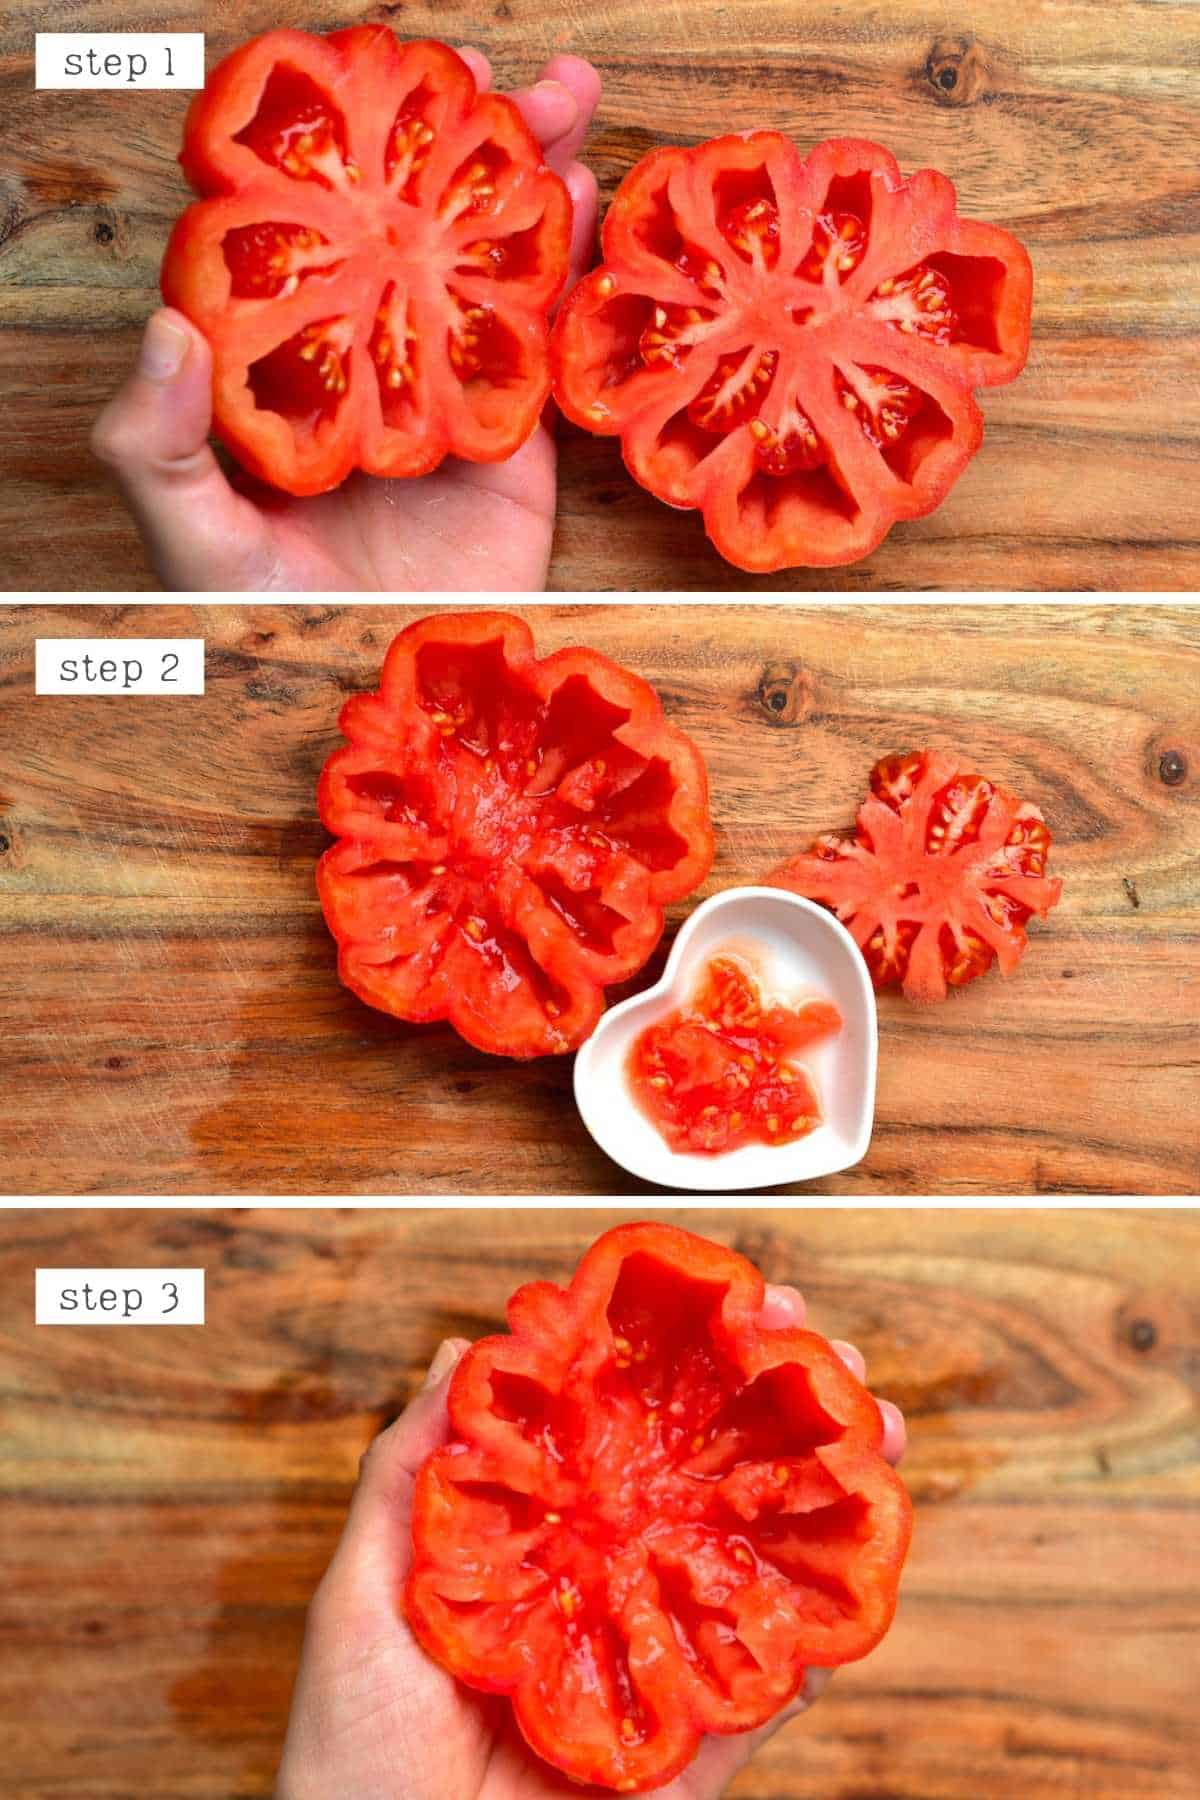 Steps for deseeding tomatoes